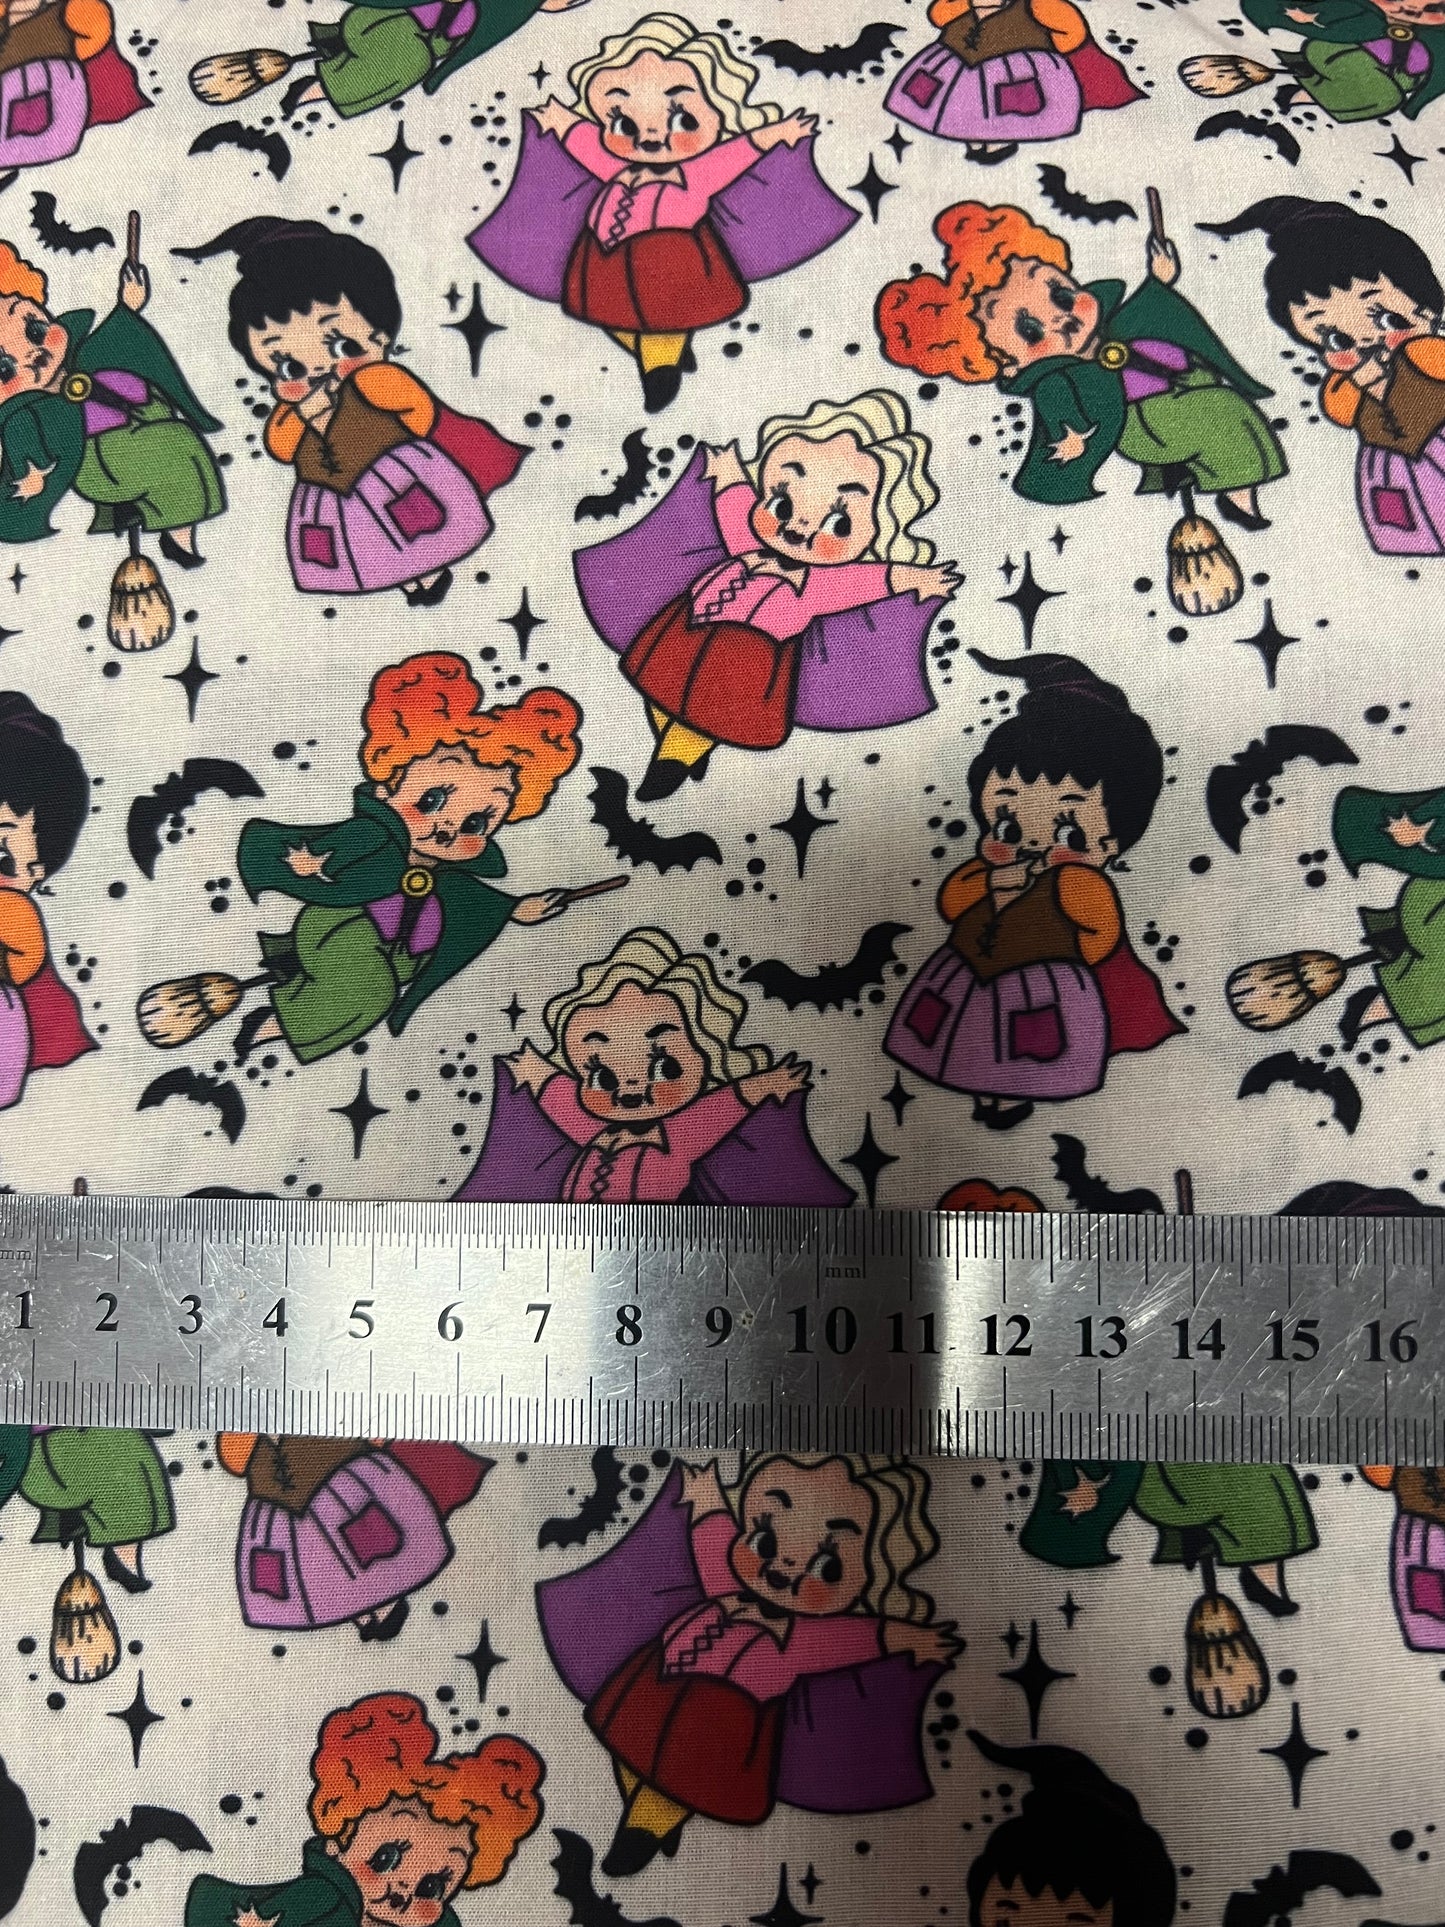 KEWPIE SANDERSON SISTERS - Polycotton Fabric from Japan